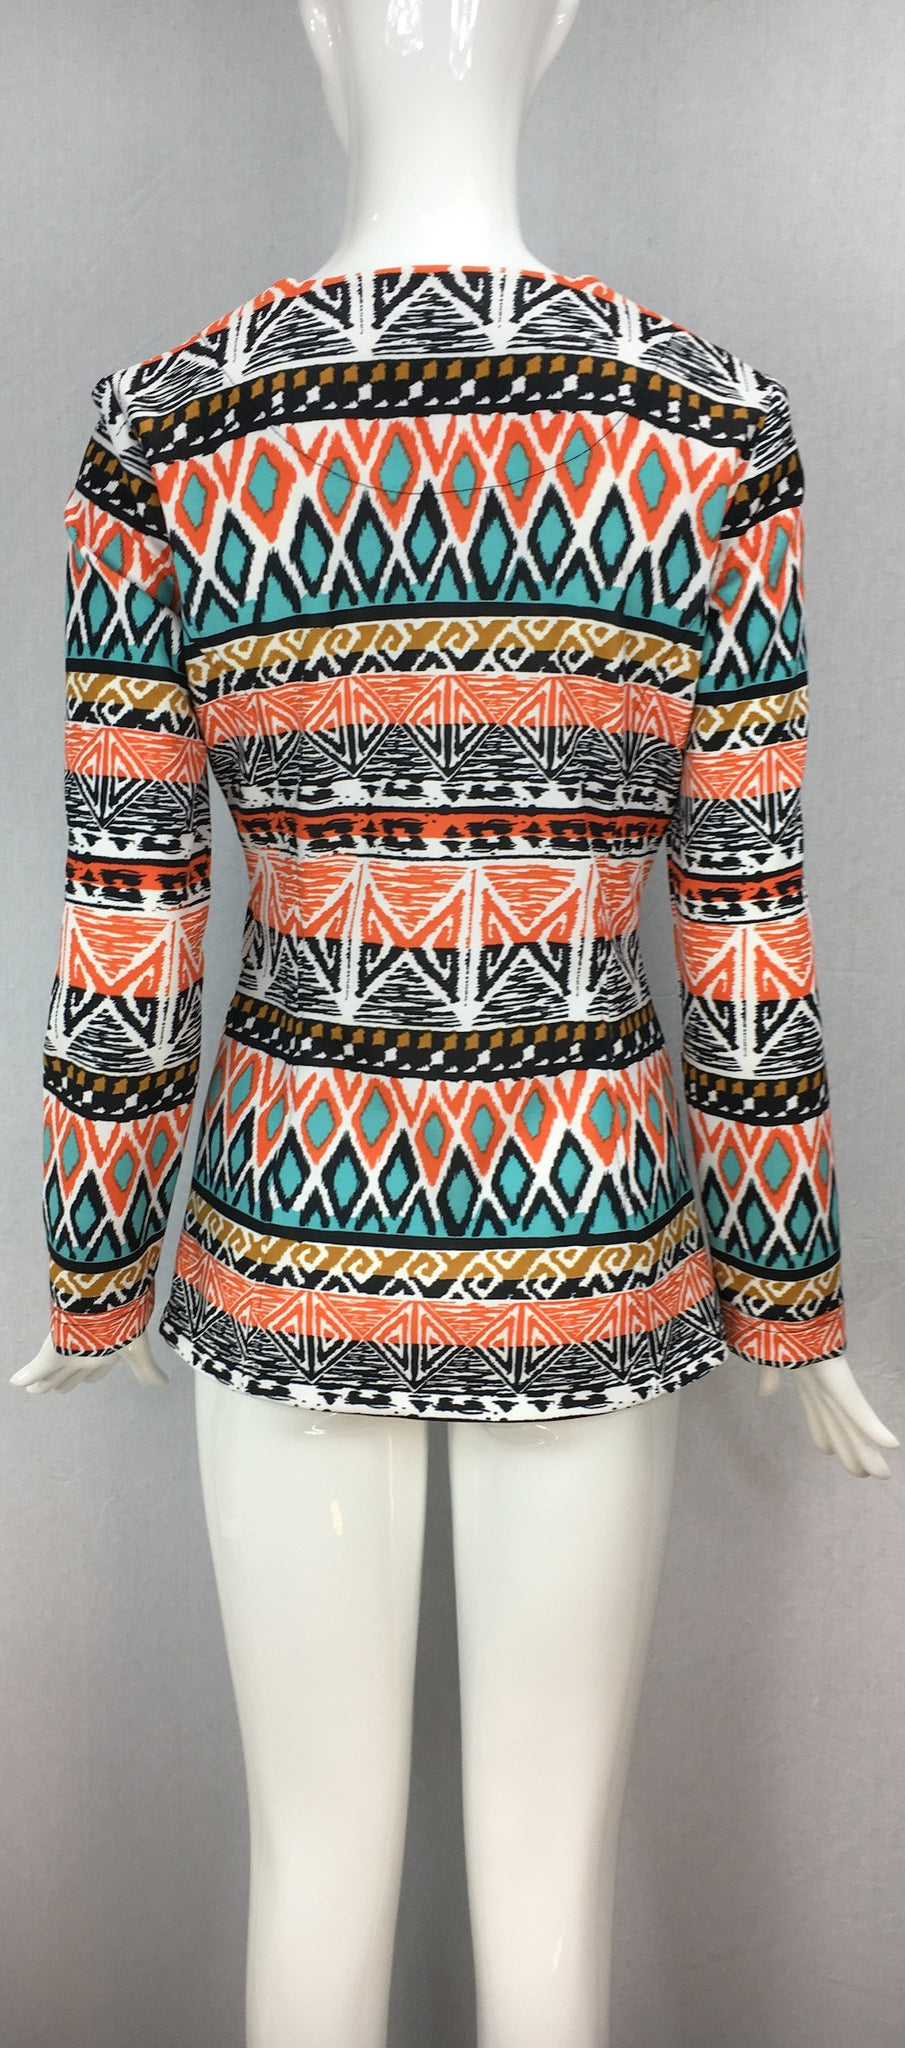 Janet Deleuse Designer Retro Tech Knit Jacket, SOLD OUT